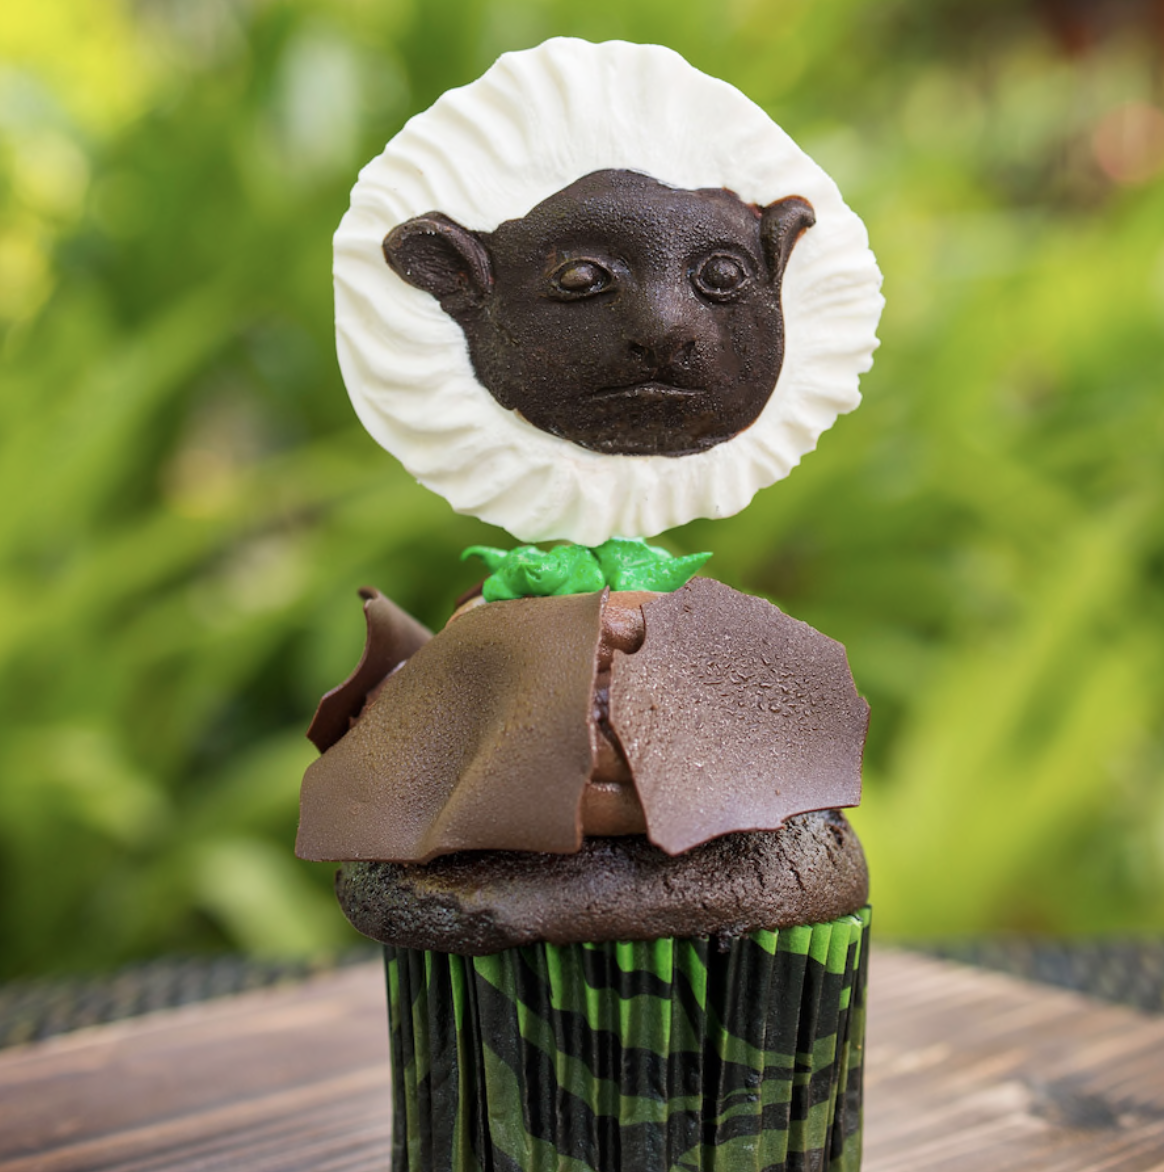 Cotton Top Tamarin Cupcake located at Creature Comforts in Animal Kingdom. 